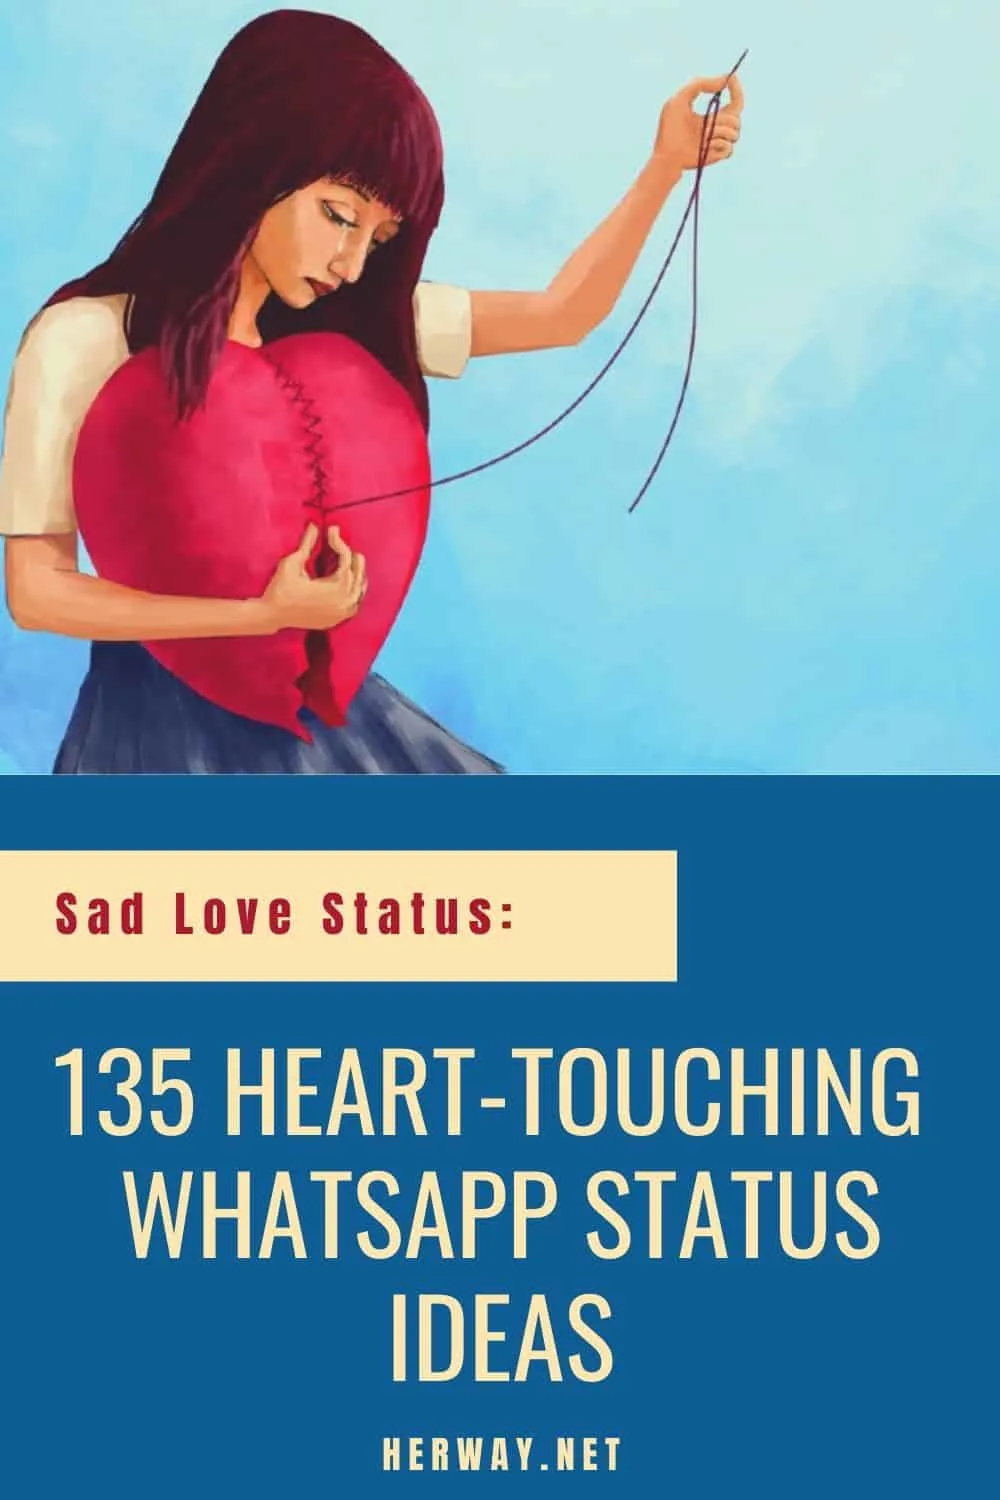 Sad Love Status: 135 Heart-Touching WhatsApp Status Ideas pinterest